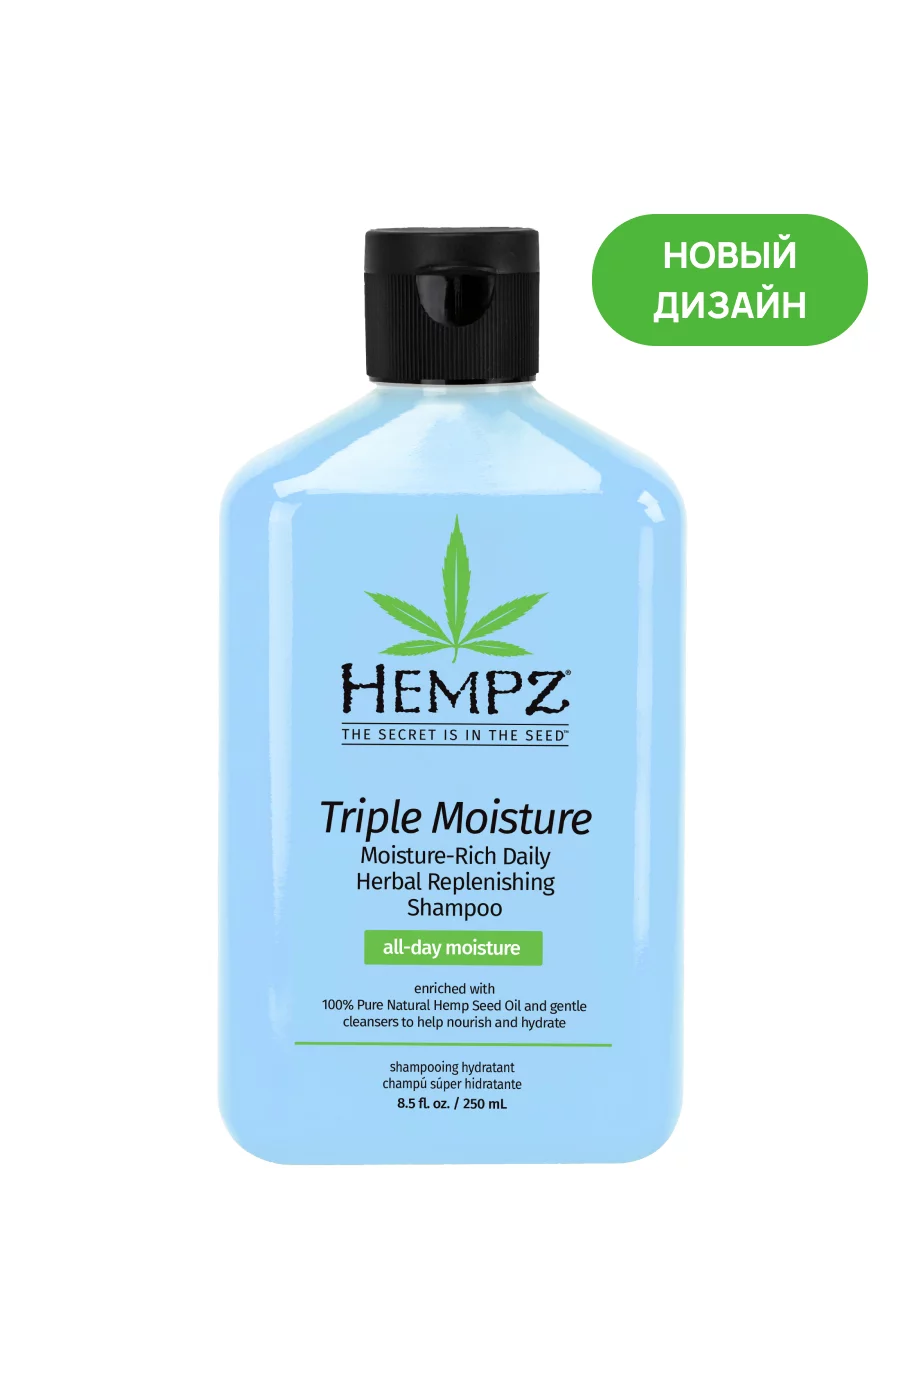 Hempz Шампунь Тройное увлажнение / Triple Moisture Replenishing Shampoo.